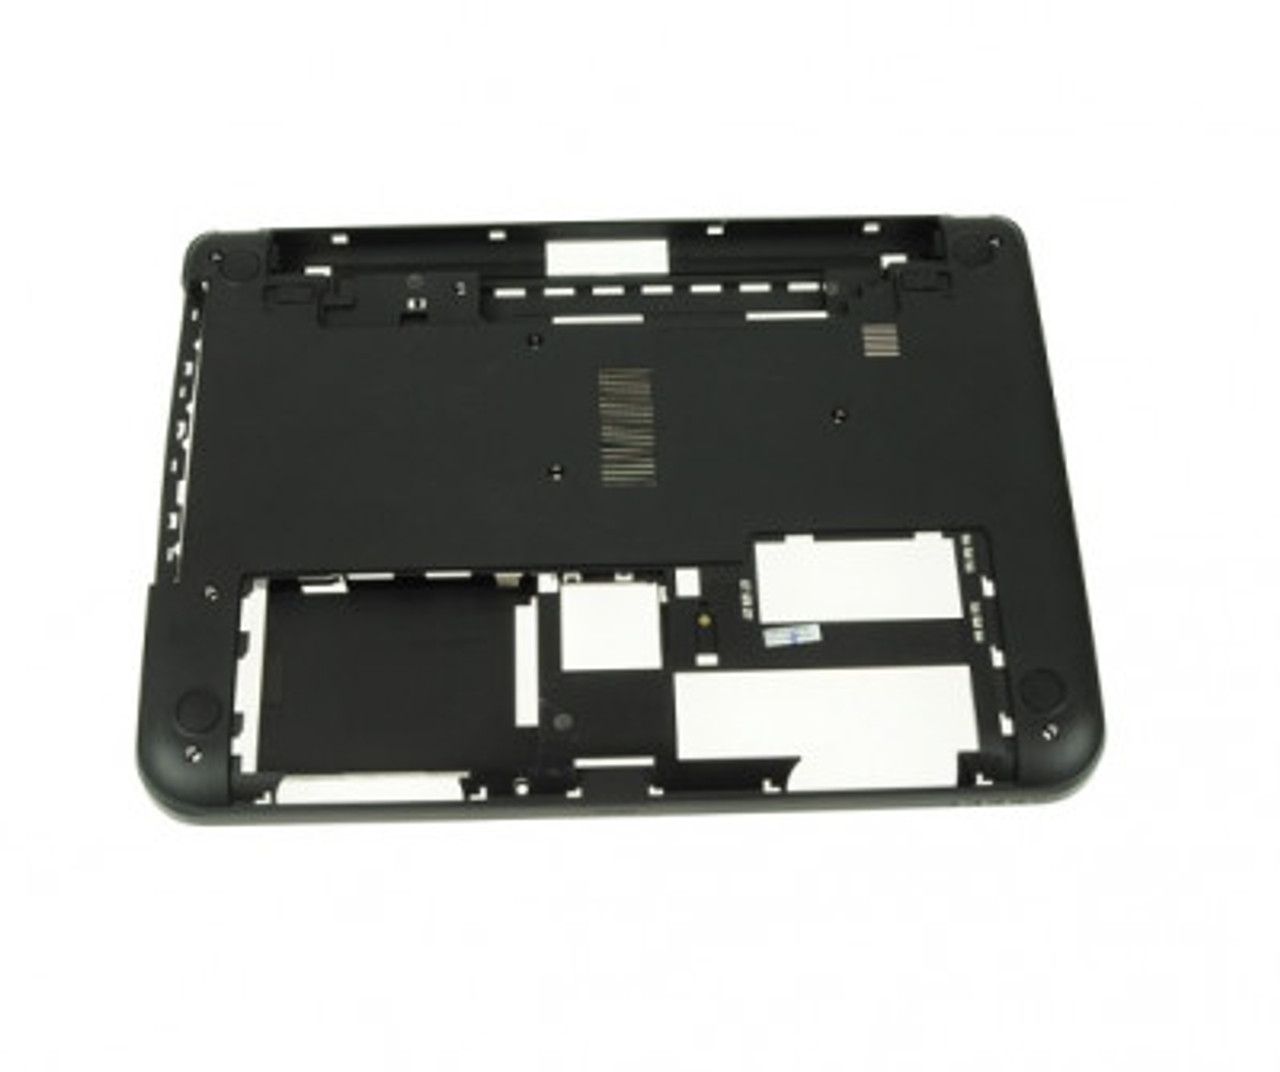 AP1AS000300 - Dell Laptop Base (Black) for Inspiron 5755 5758